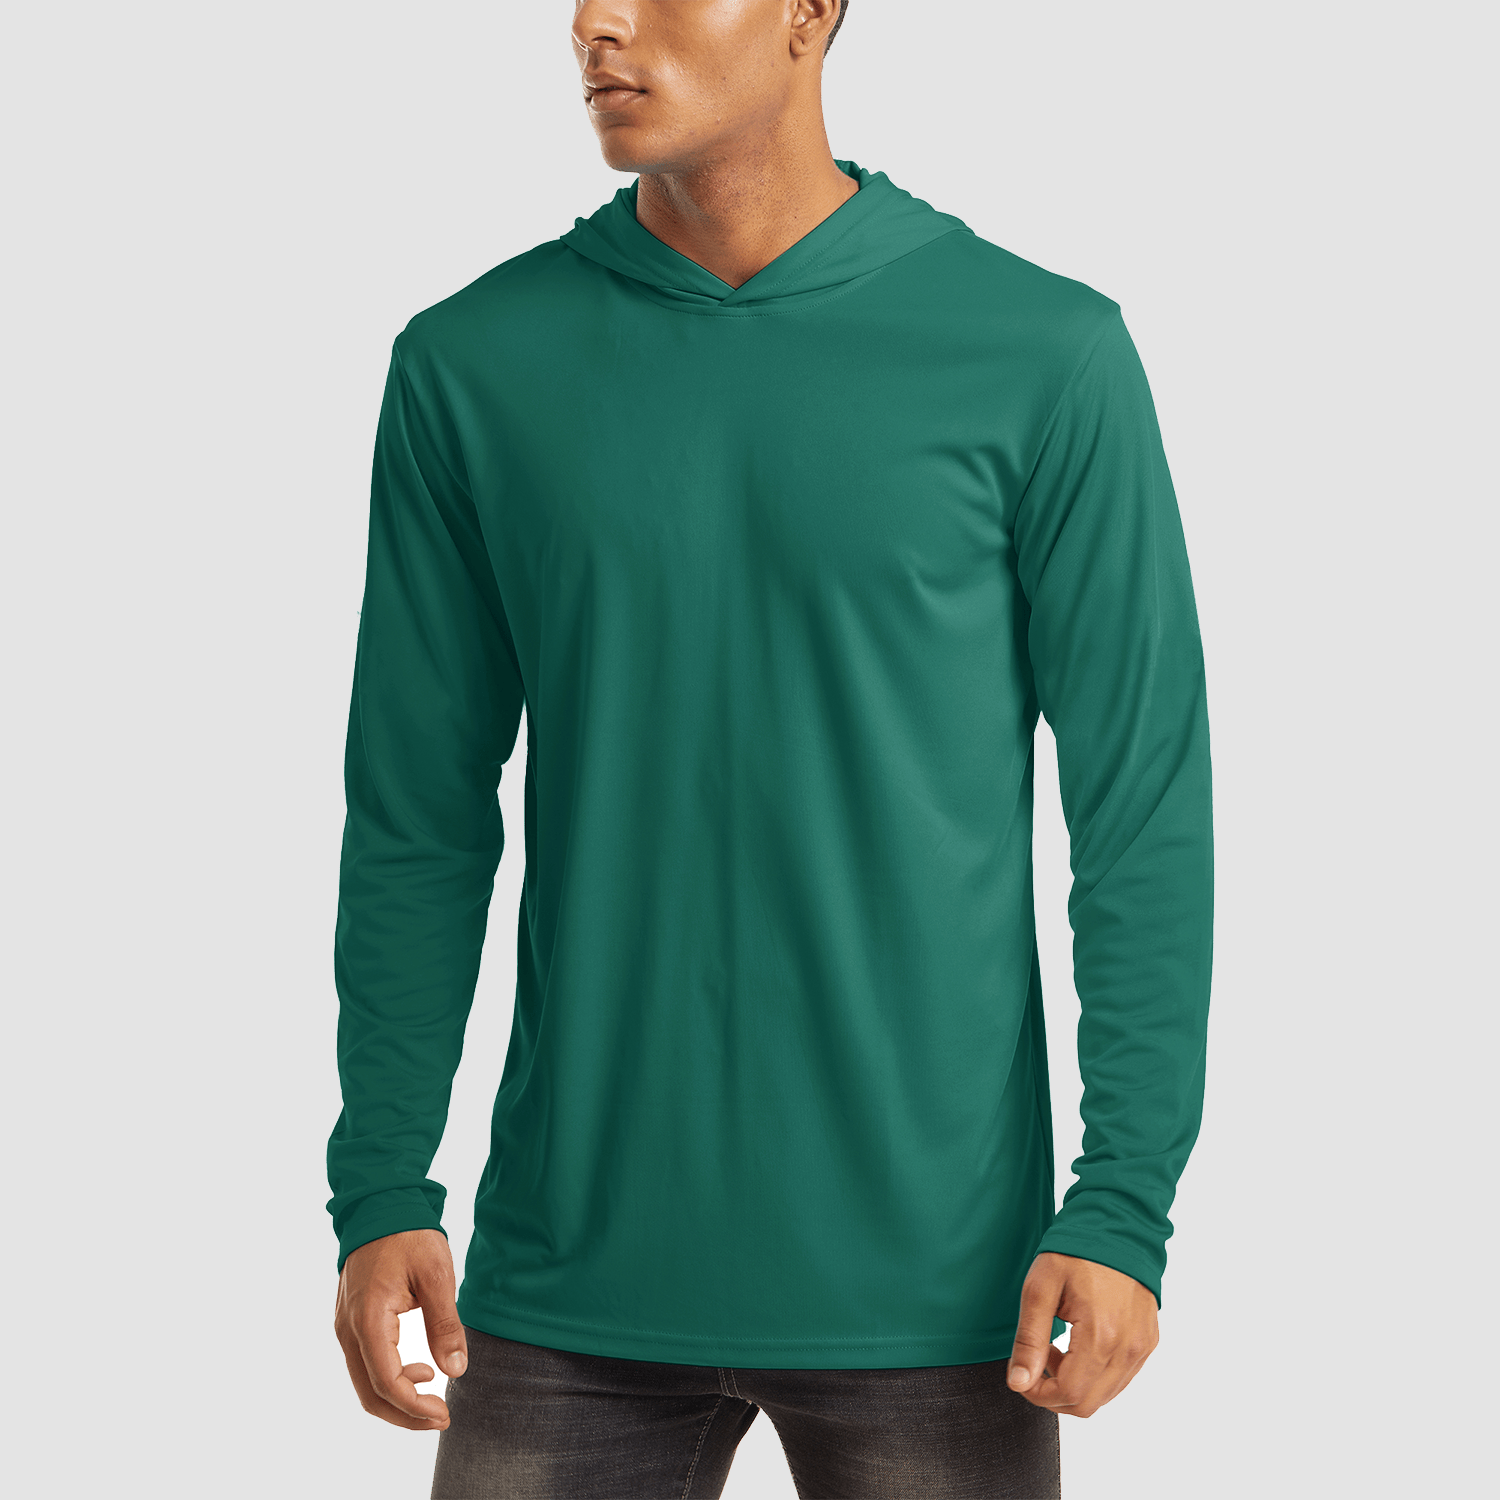 【Buy 4 Get 4th Free】Men's Long Sleeve Hooded Shirt Upf 50+ Athletic Shirts, Dull Cyan / M